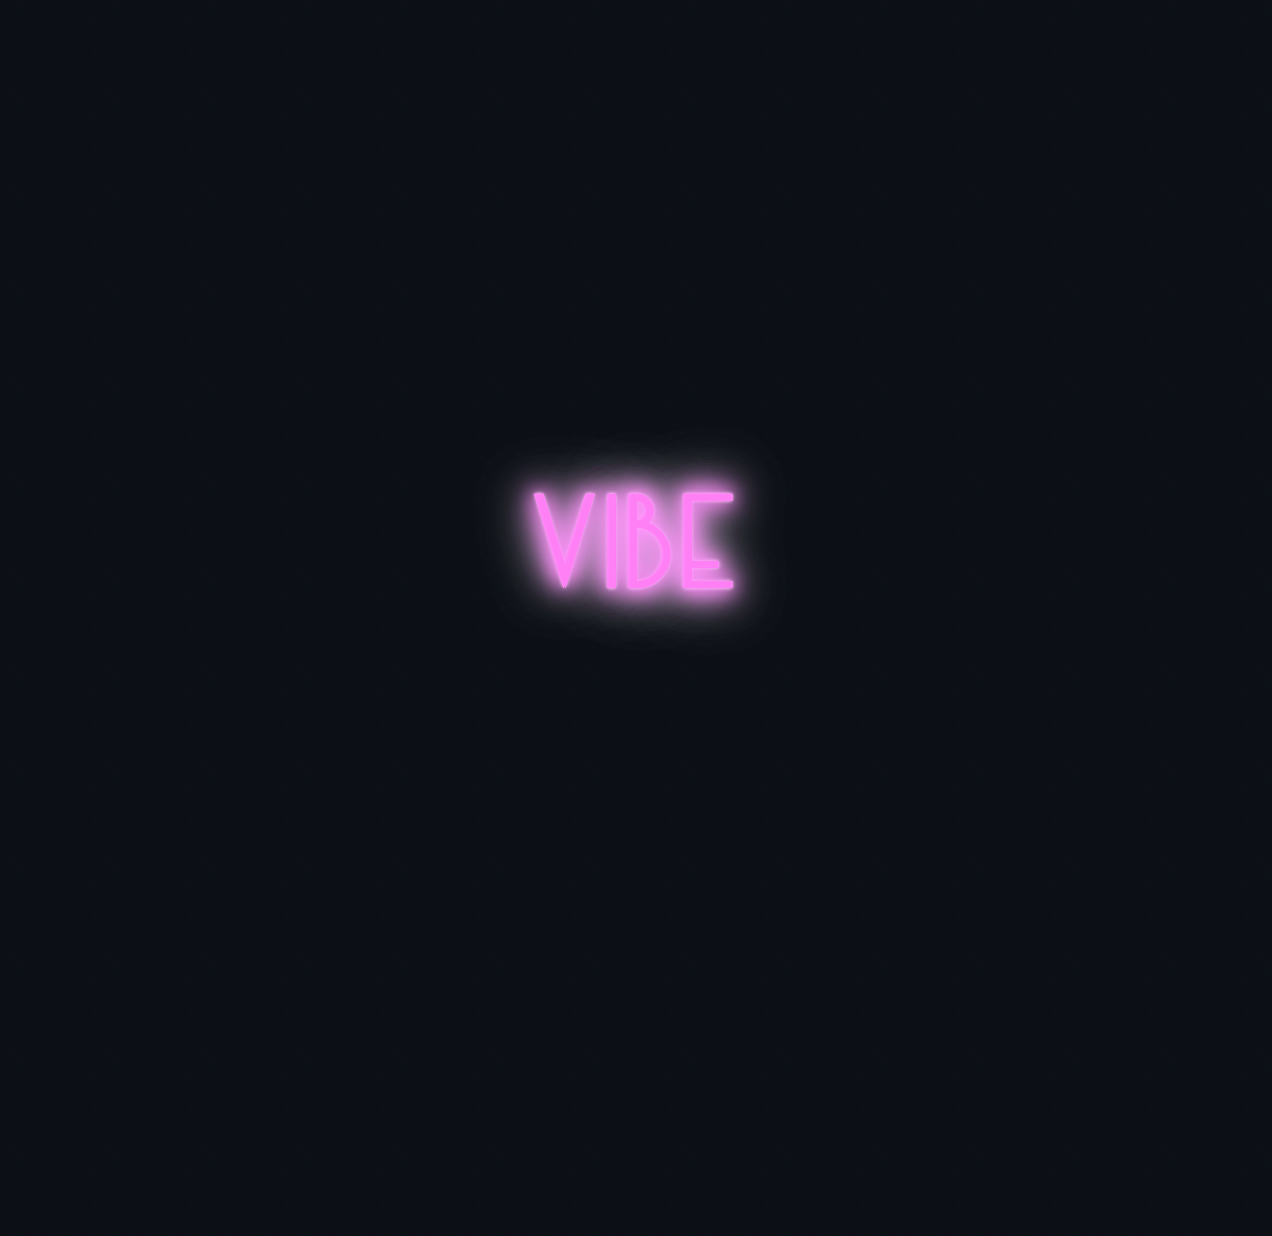 Custom neon sign - Vibe